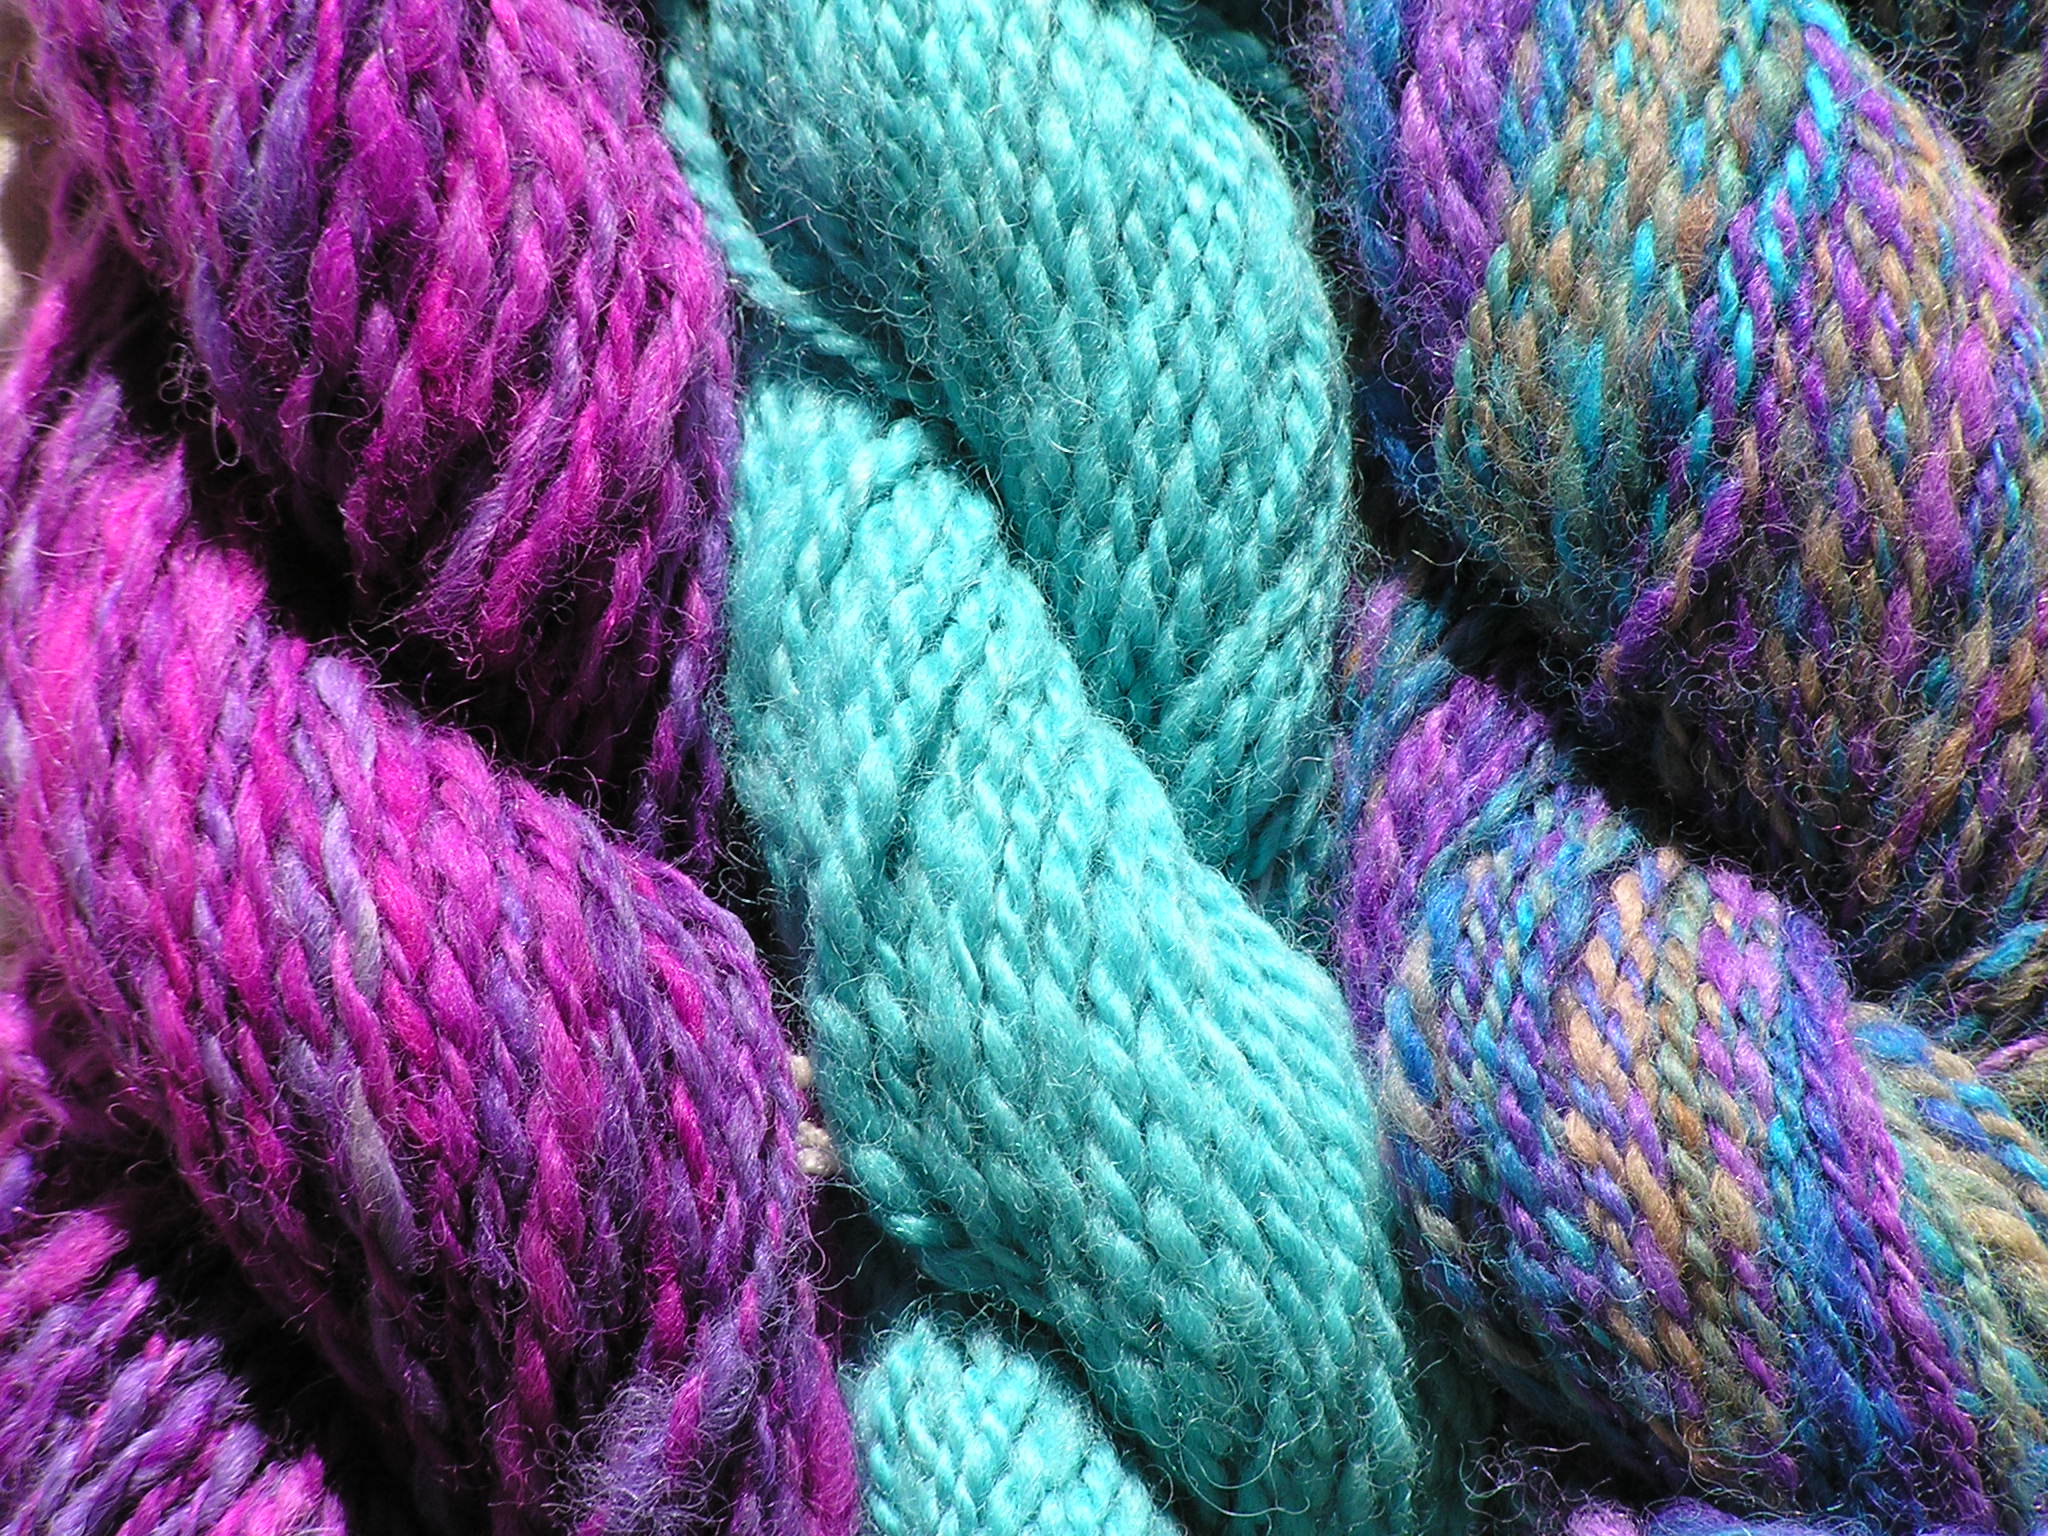 Skeins of dyed handspun yarn